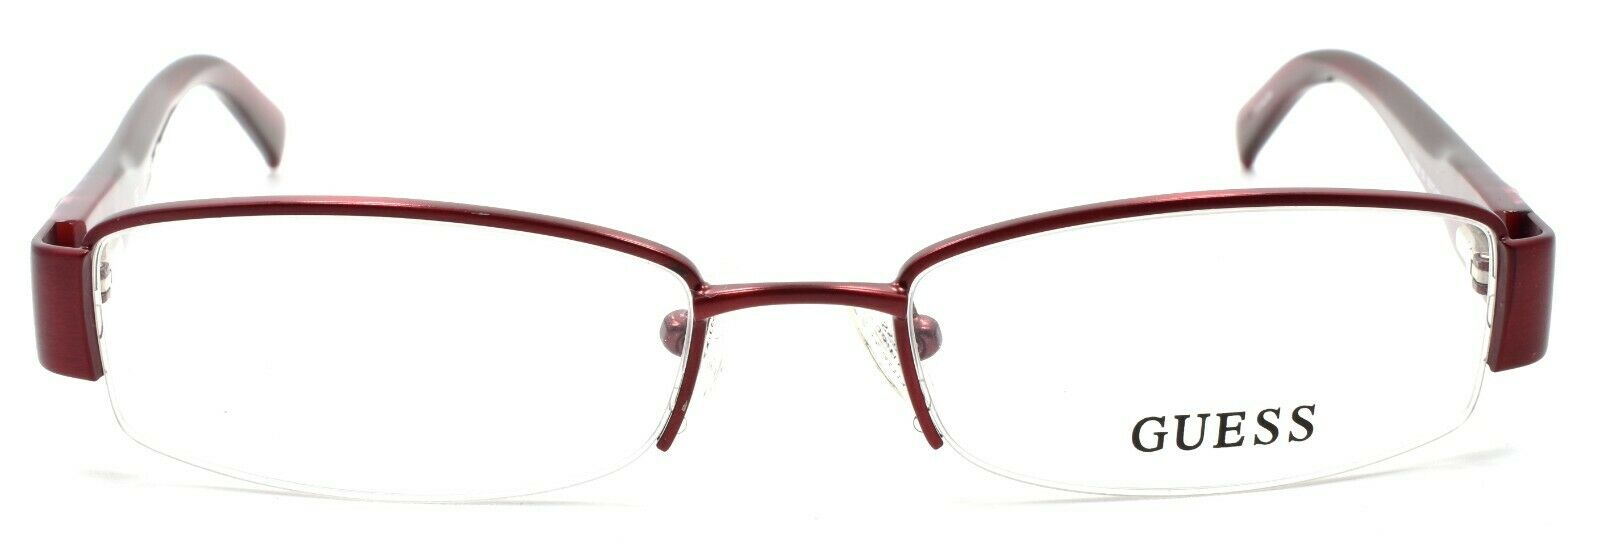 2-GUESS GU2368 BU Women's Eyeglasses Frames Half-Rim Petite 50-17-135 Burgundy-715583700871-IKSpecs